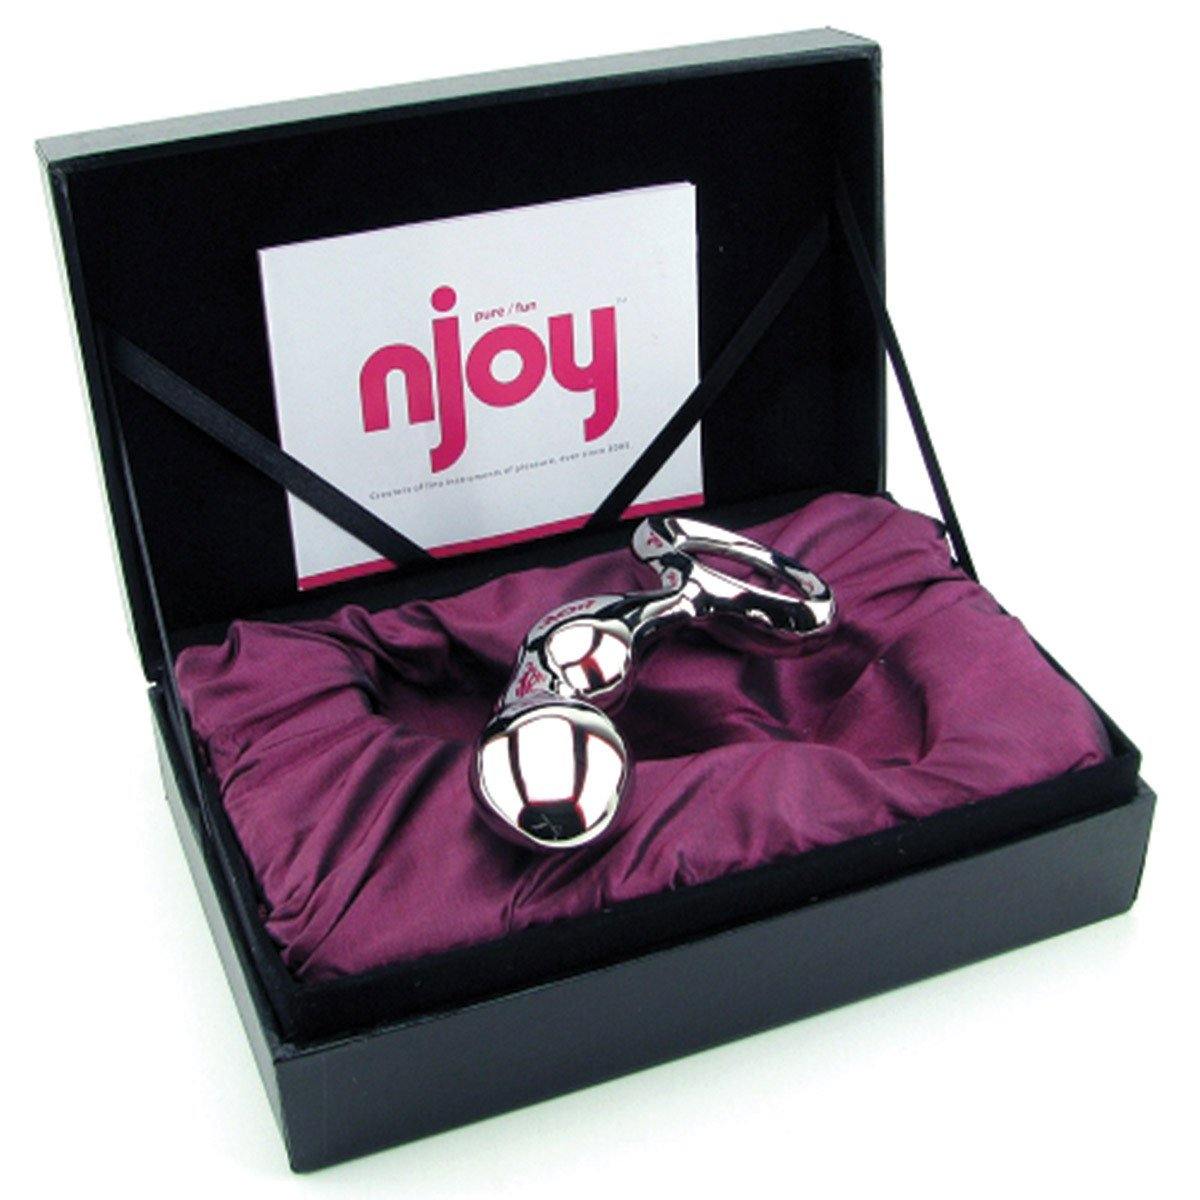 Njoy Prostate fun Plug - Buy At Luxury Toy X - Free 3-Day Shipping